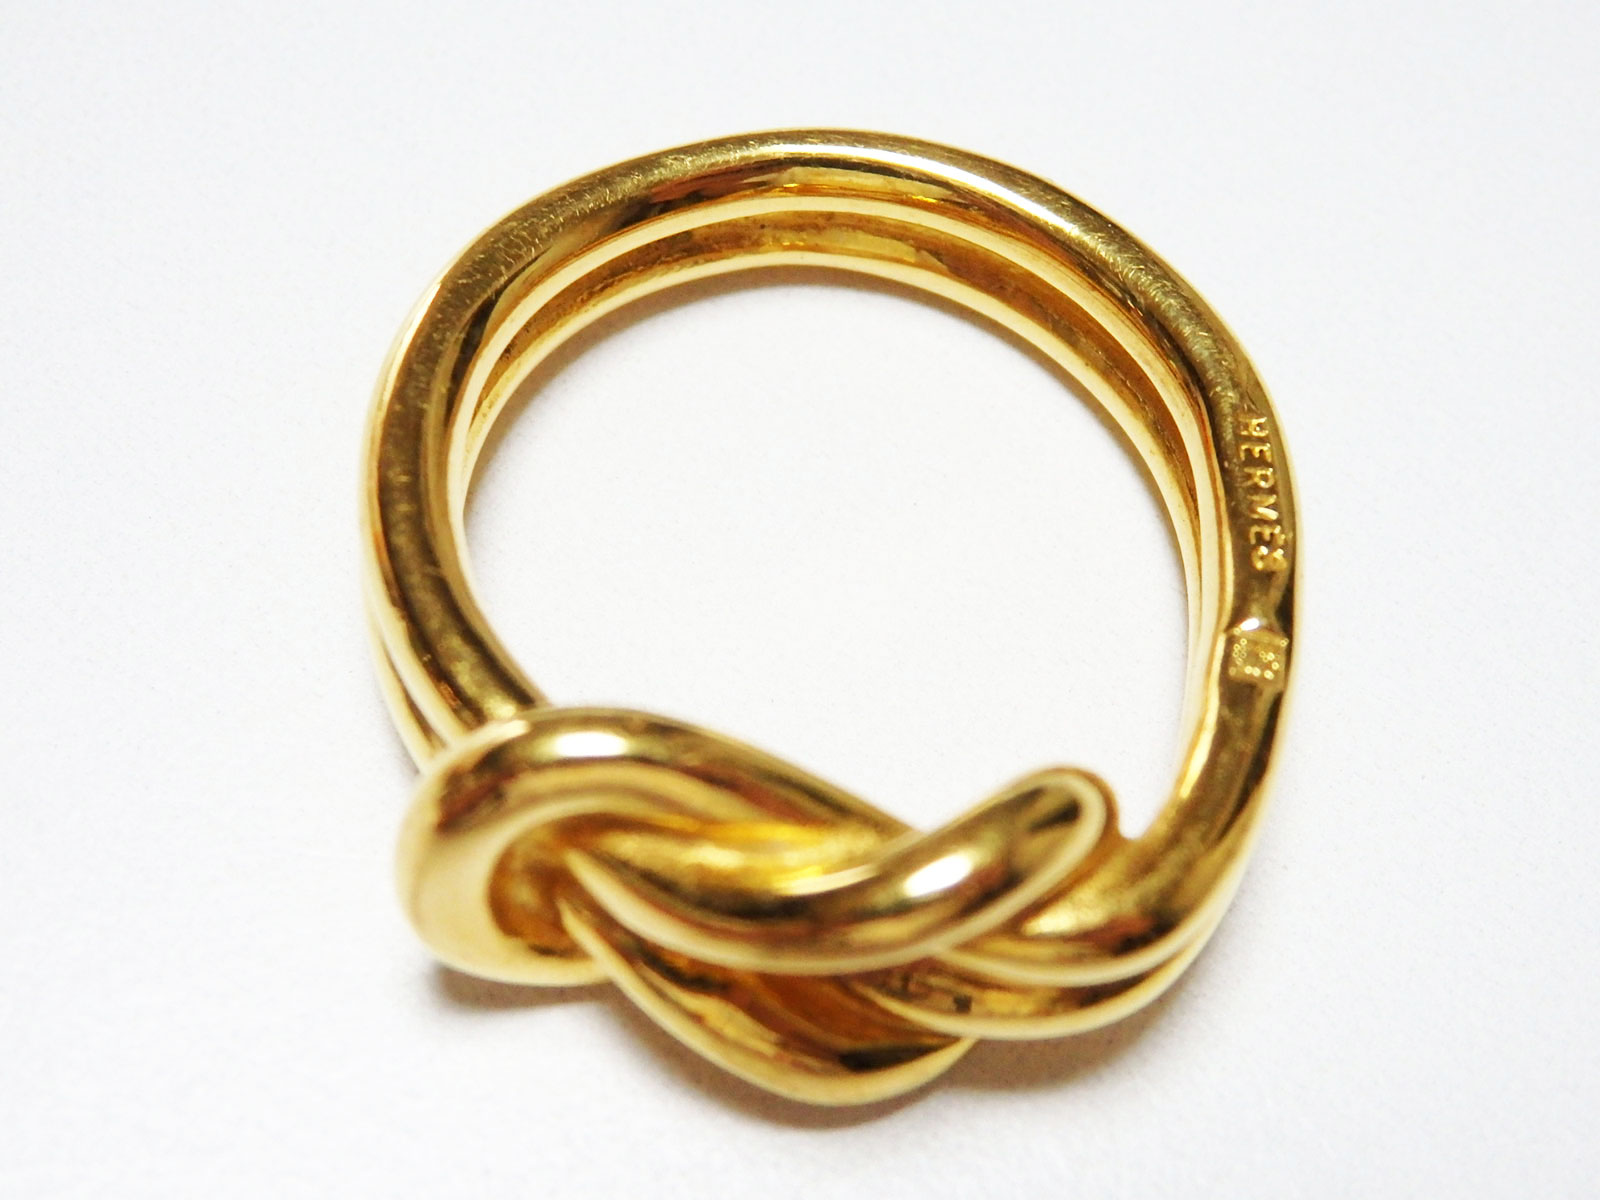 Auth HERMES Scarf Ring GoldGoldtone e14182 eBay